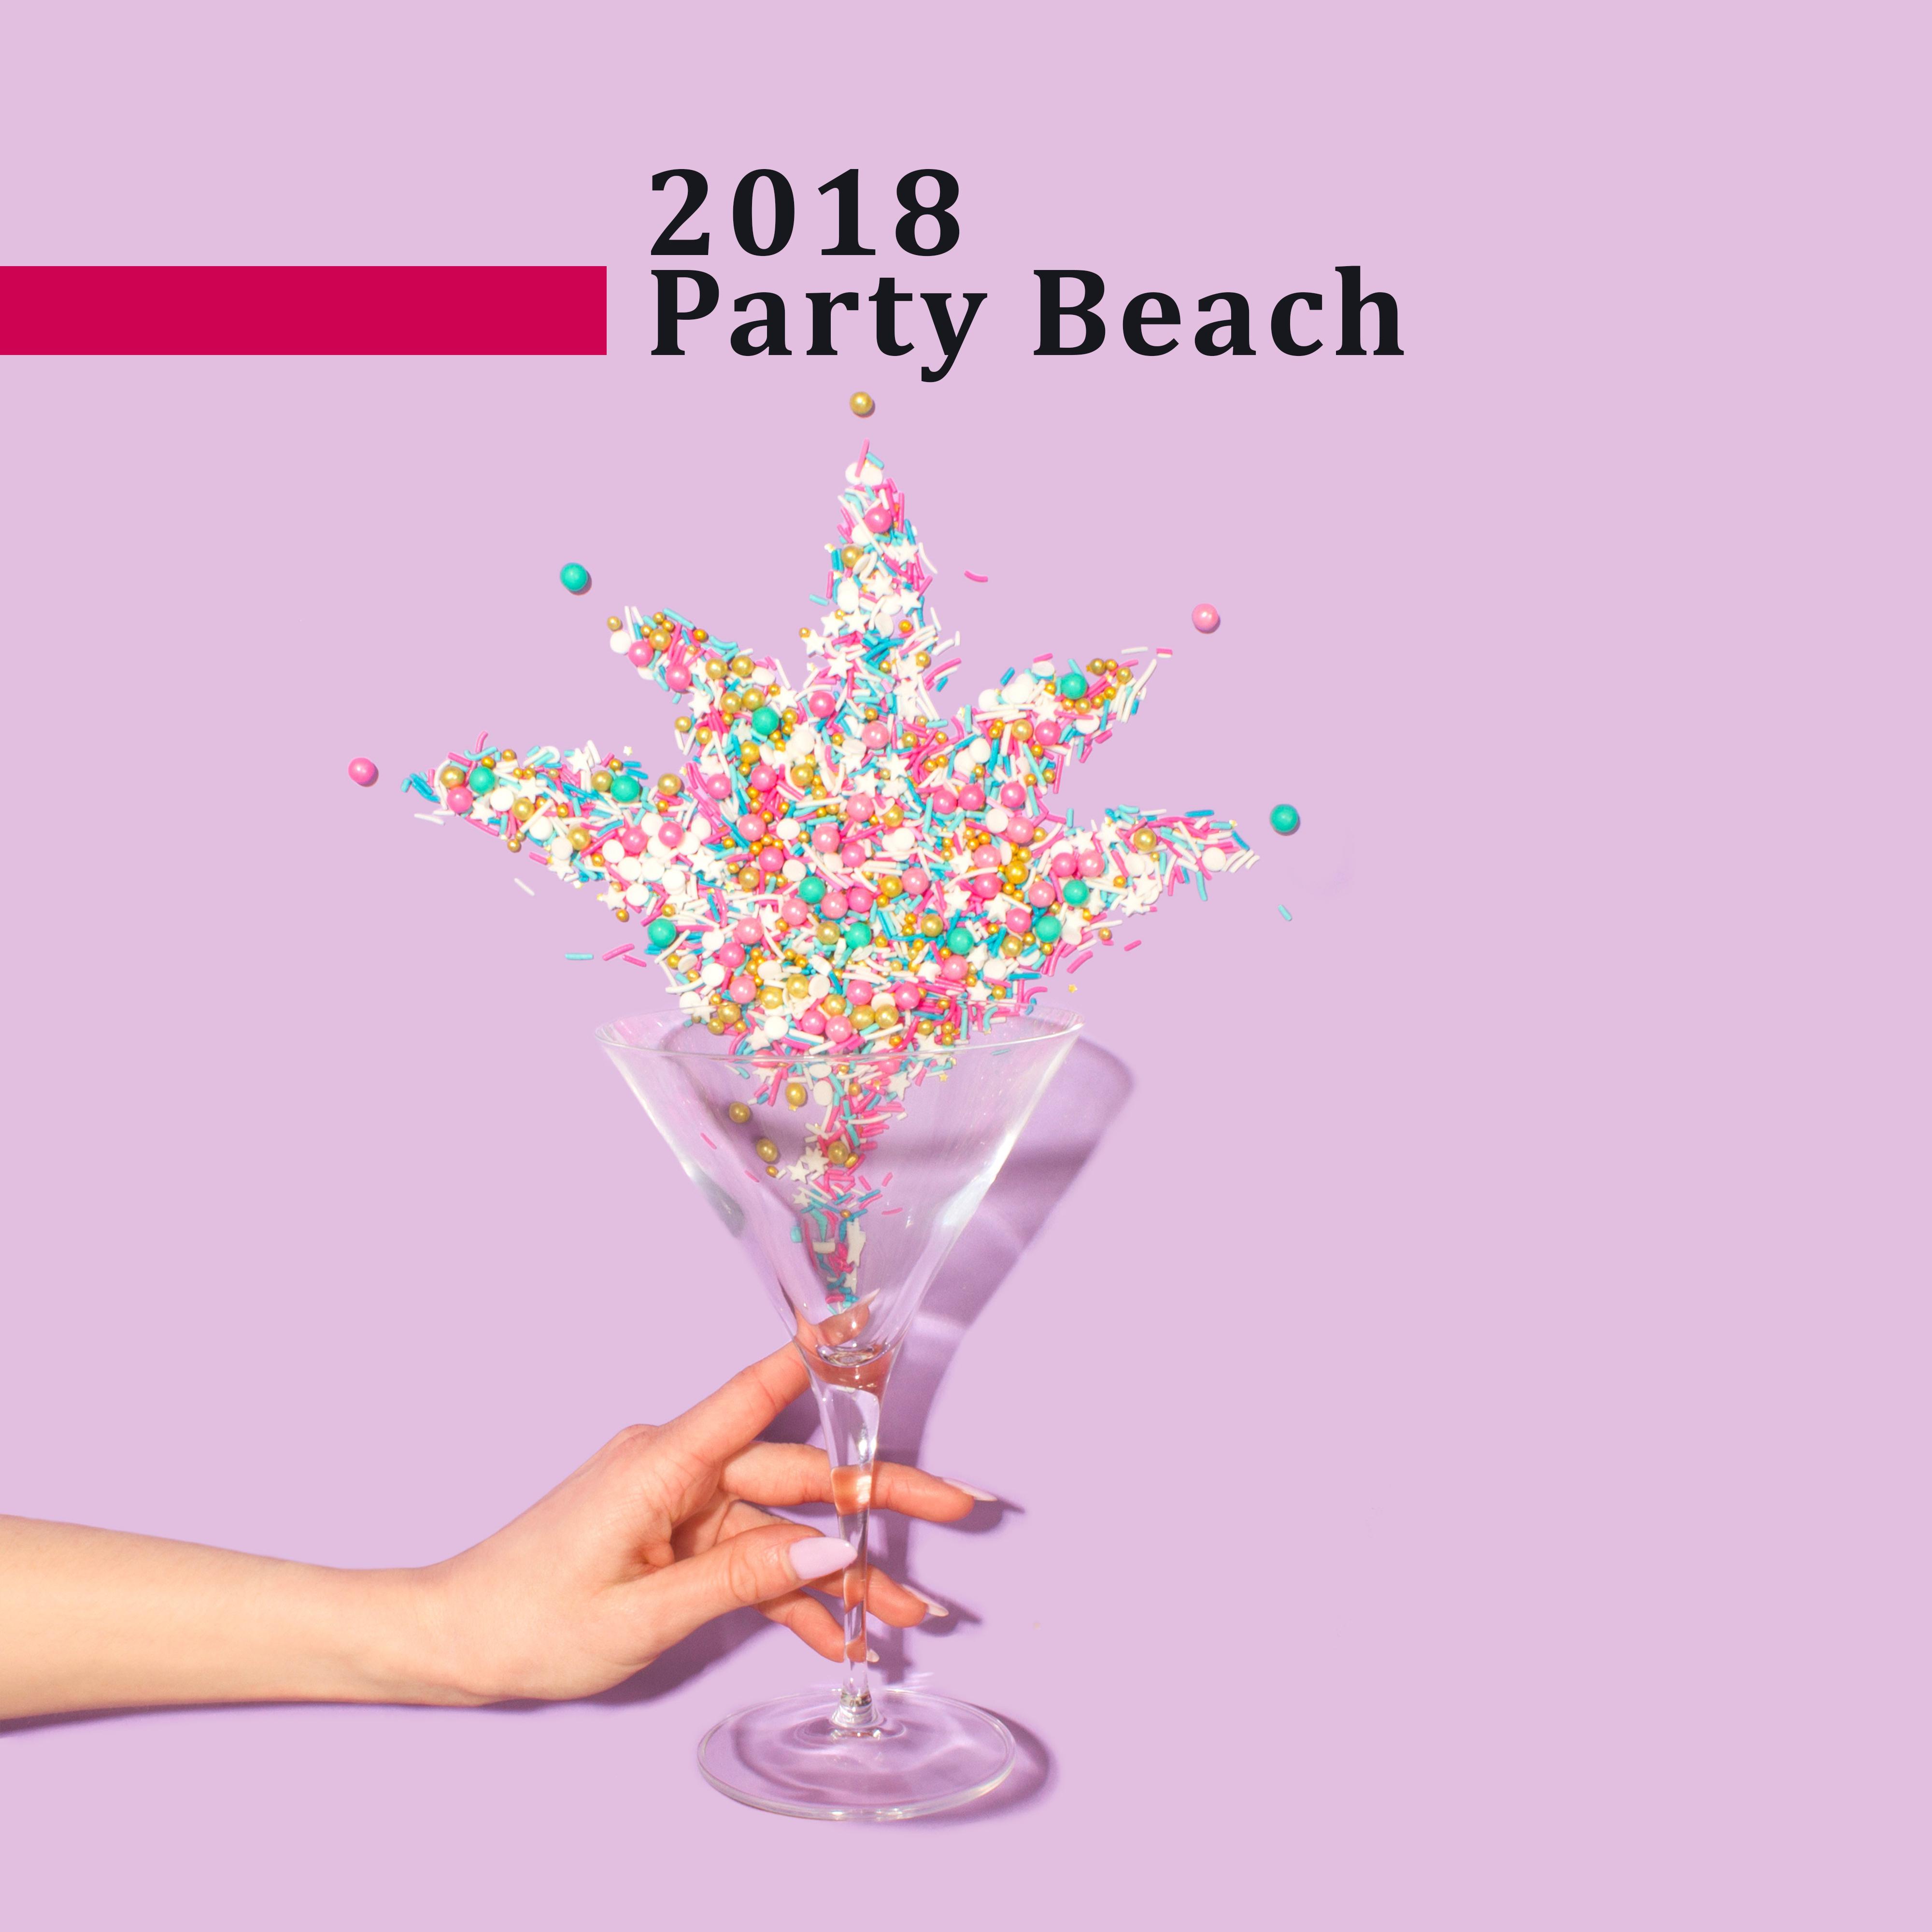 2018 Party Beach